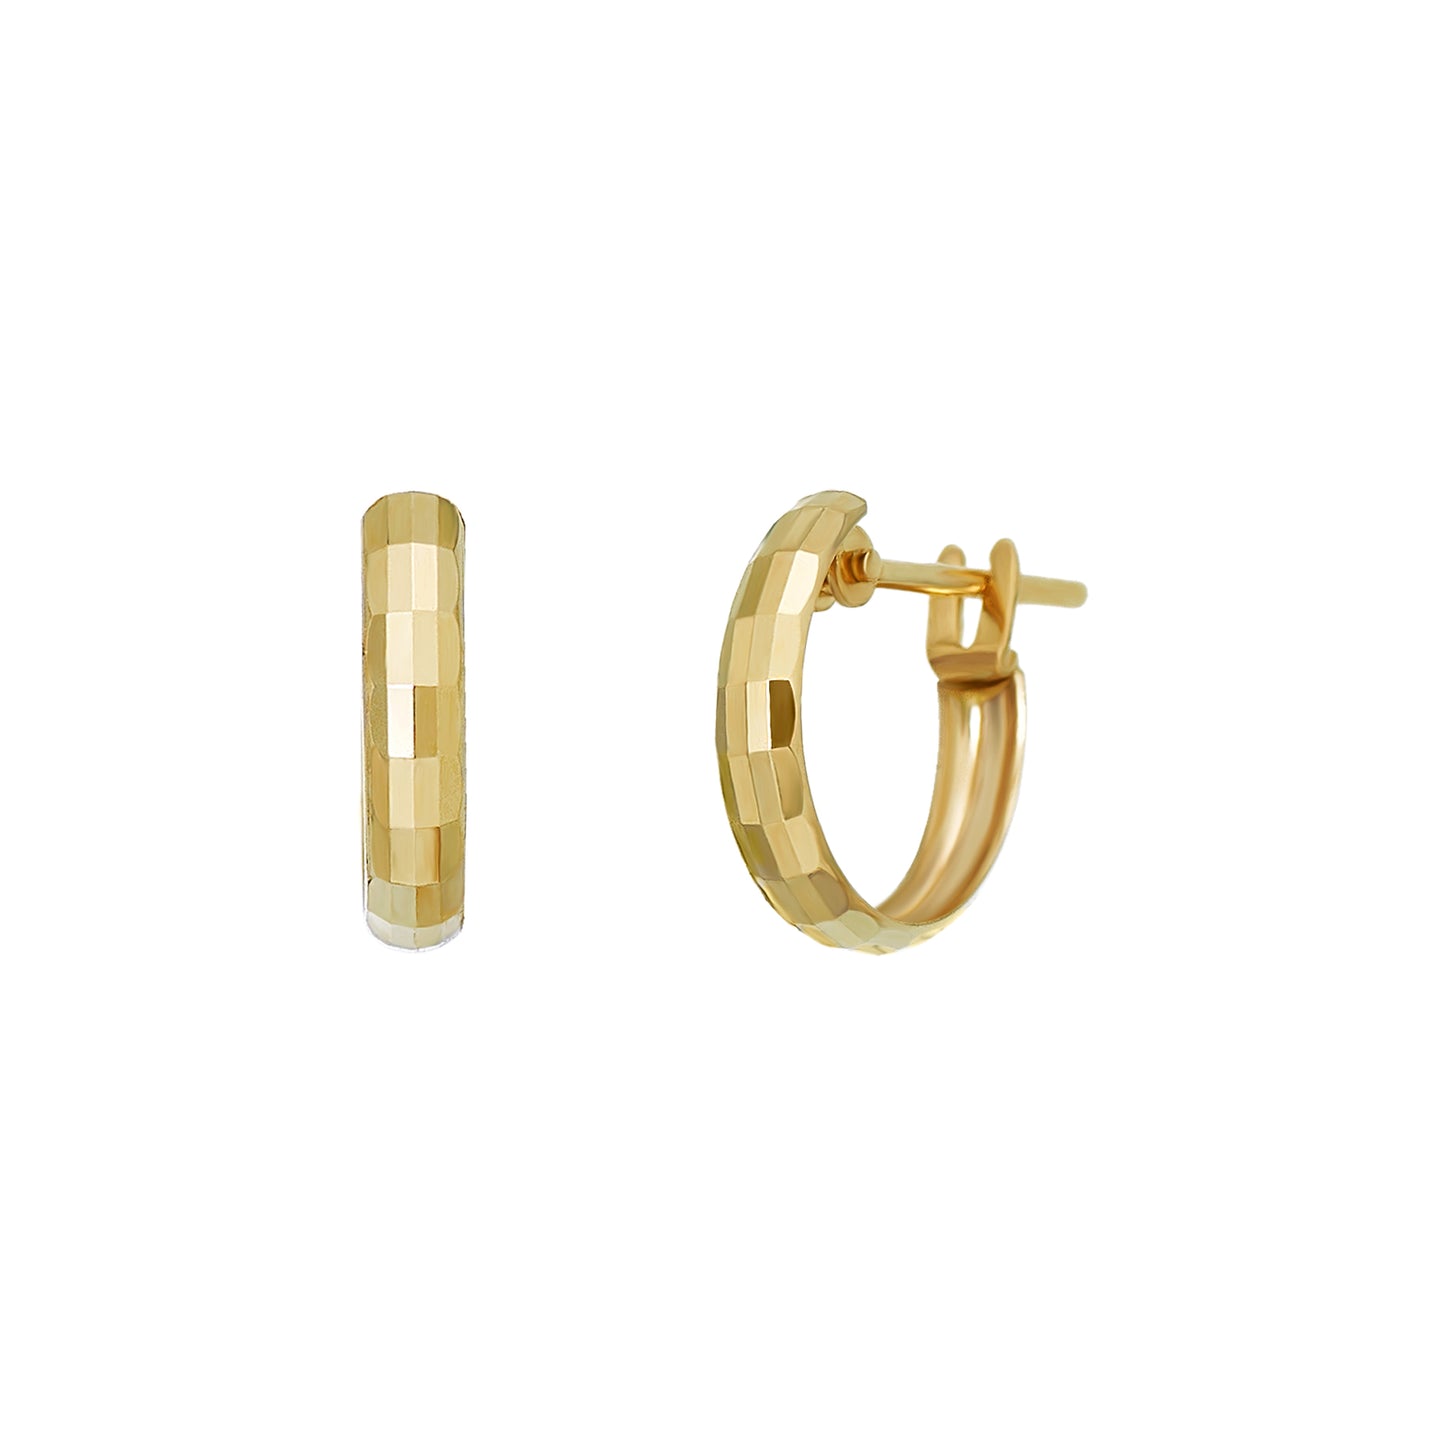 18K/10K Yellow Gold Mirror Cut Hoop Earrings - Product Image